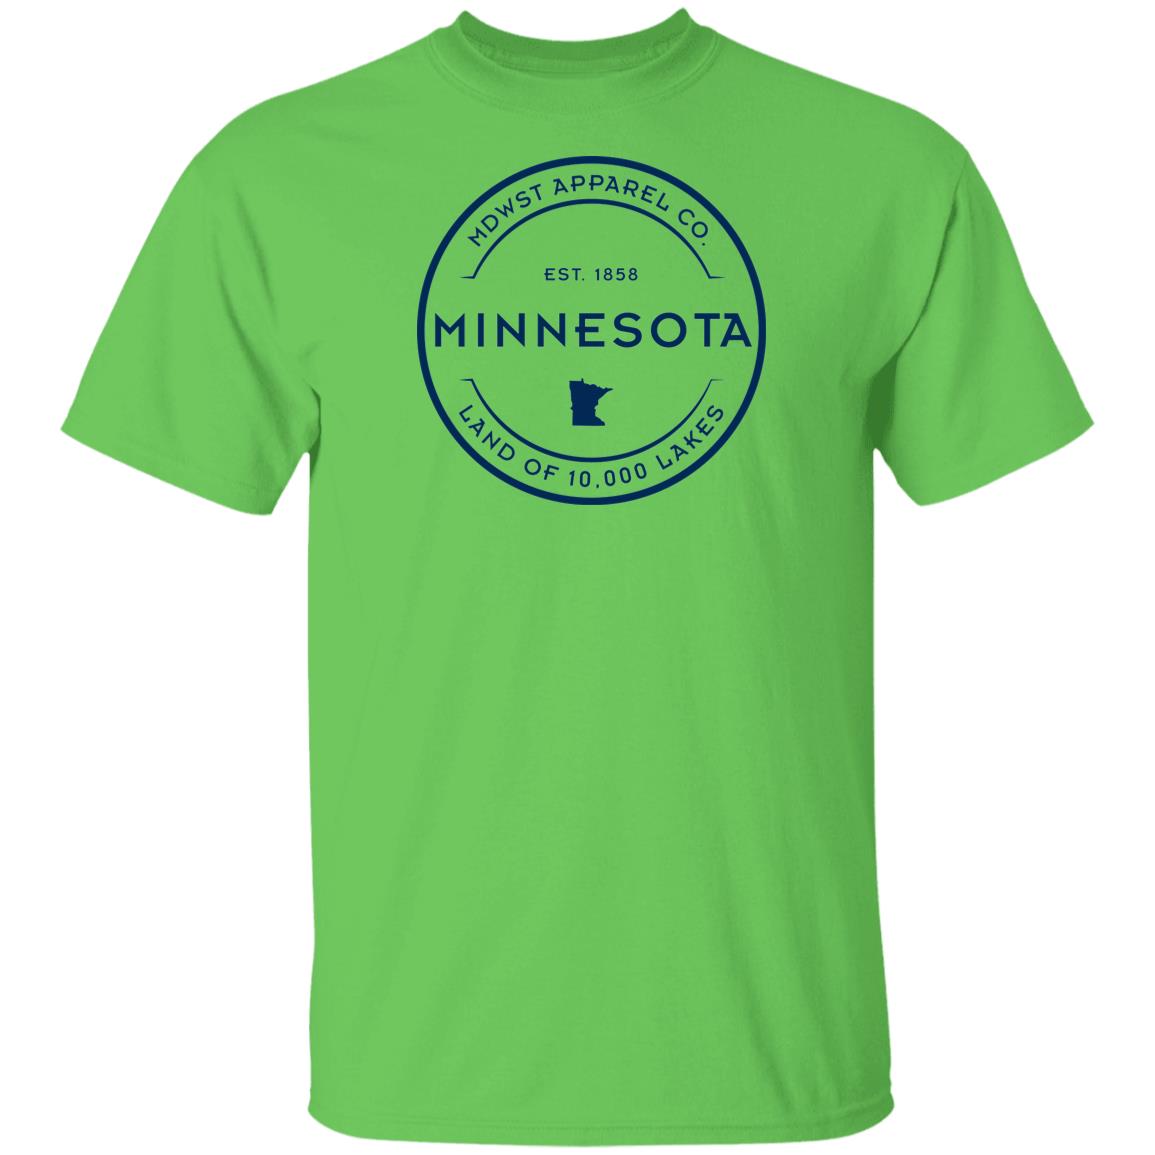 Minnesota Crest Youth 5.3 oz 100% Cotton T-Shirt